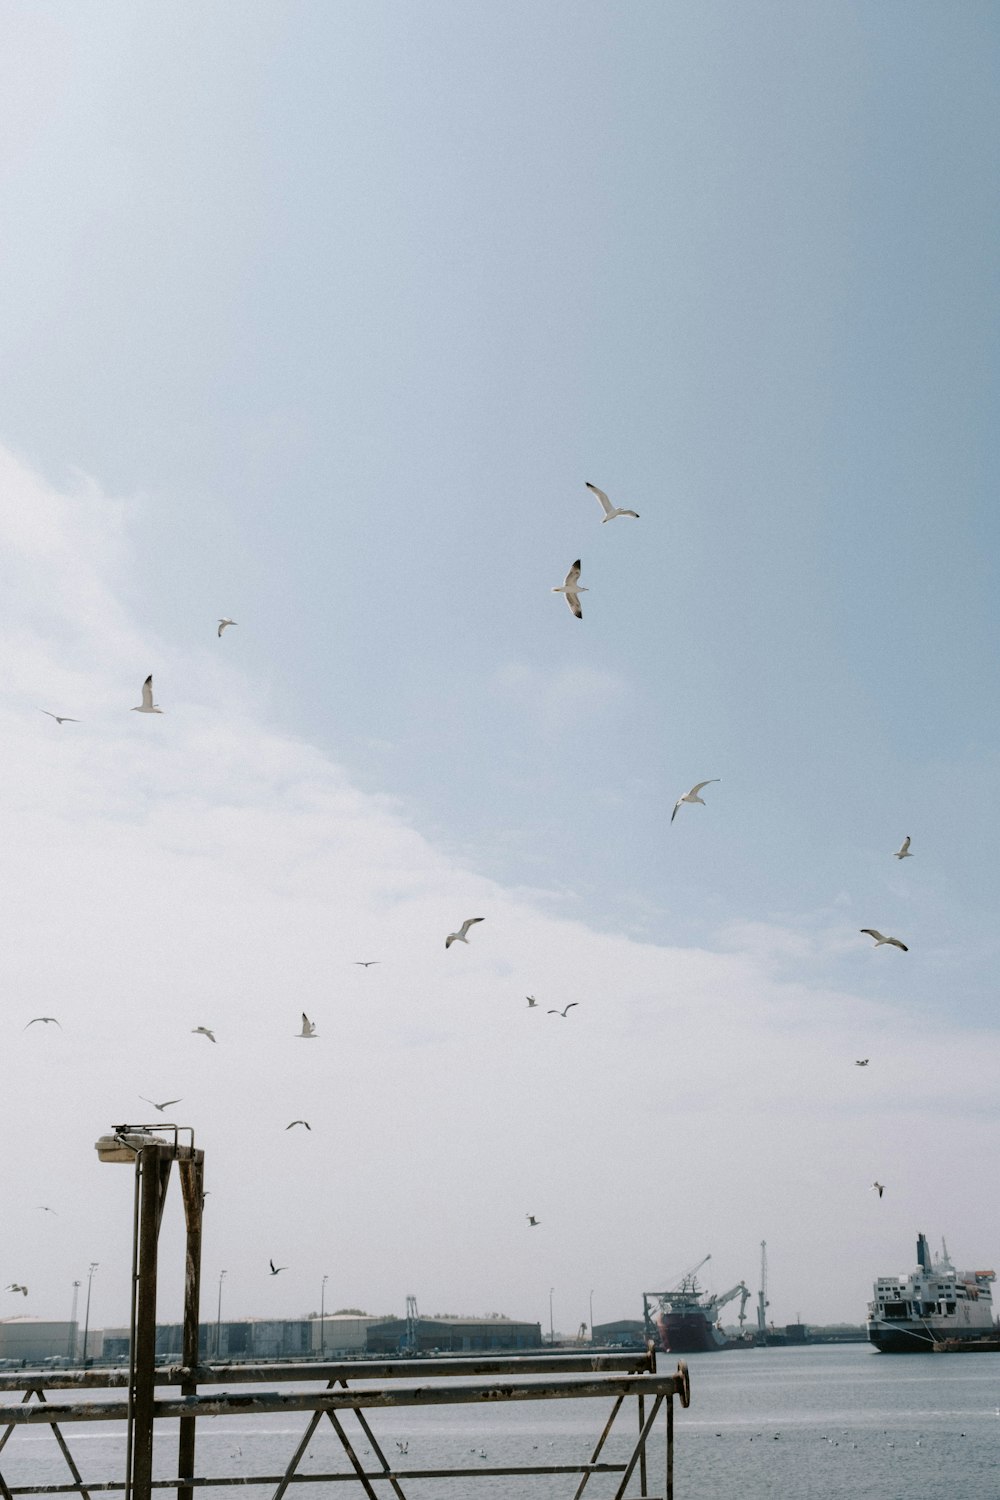 birds flying over a pier